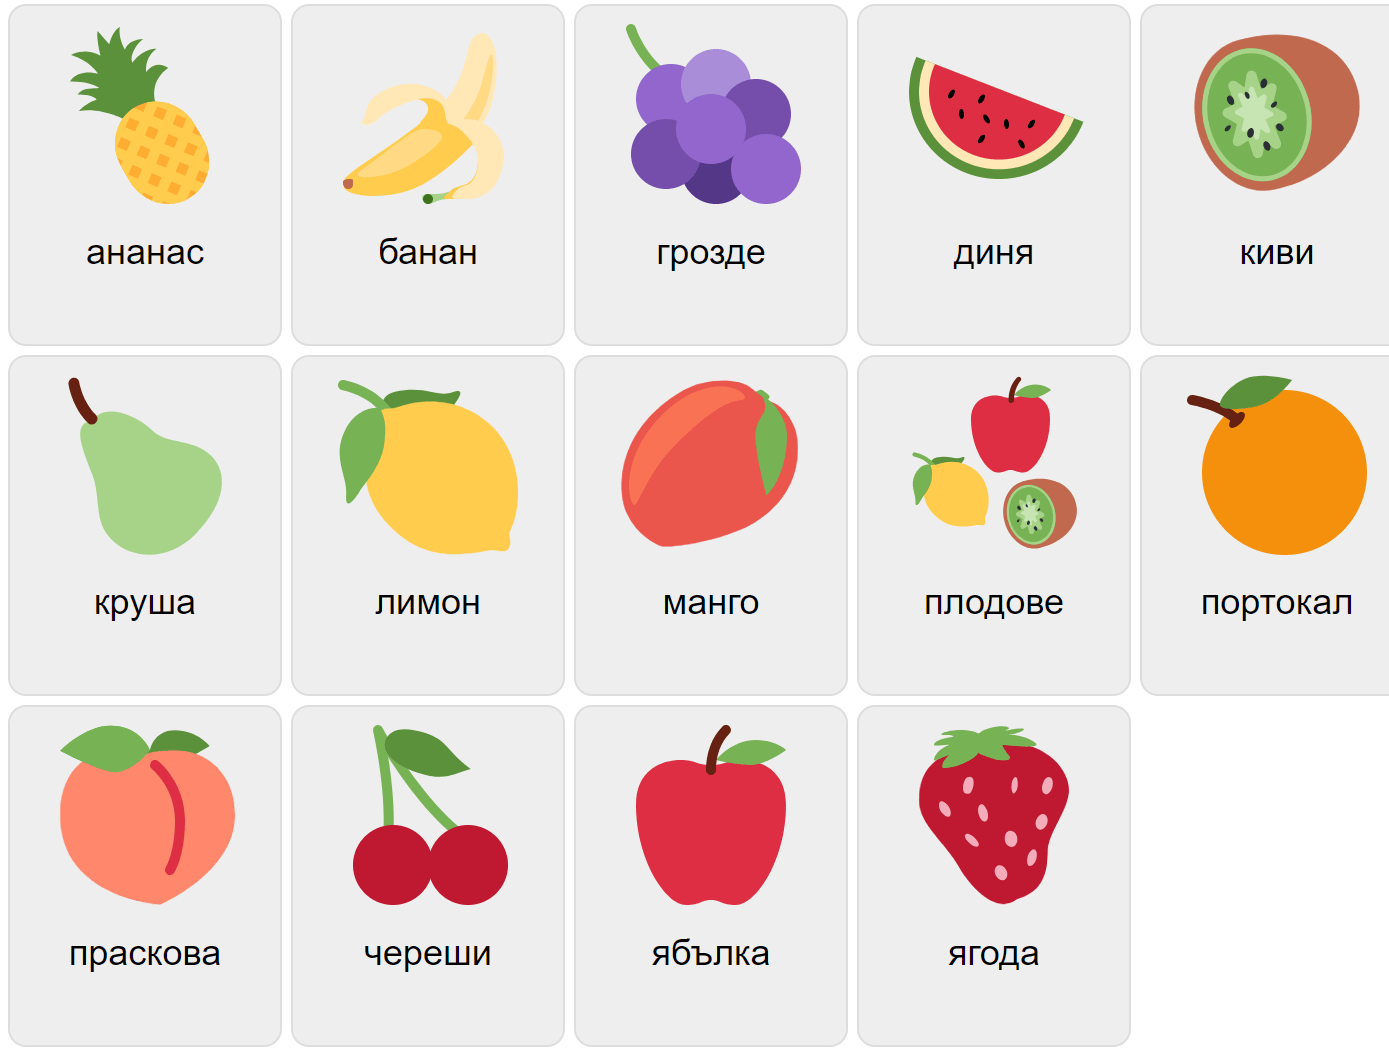 Fruits in Bulgarian